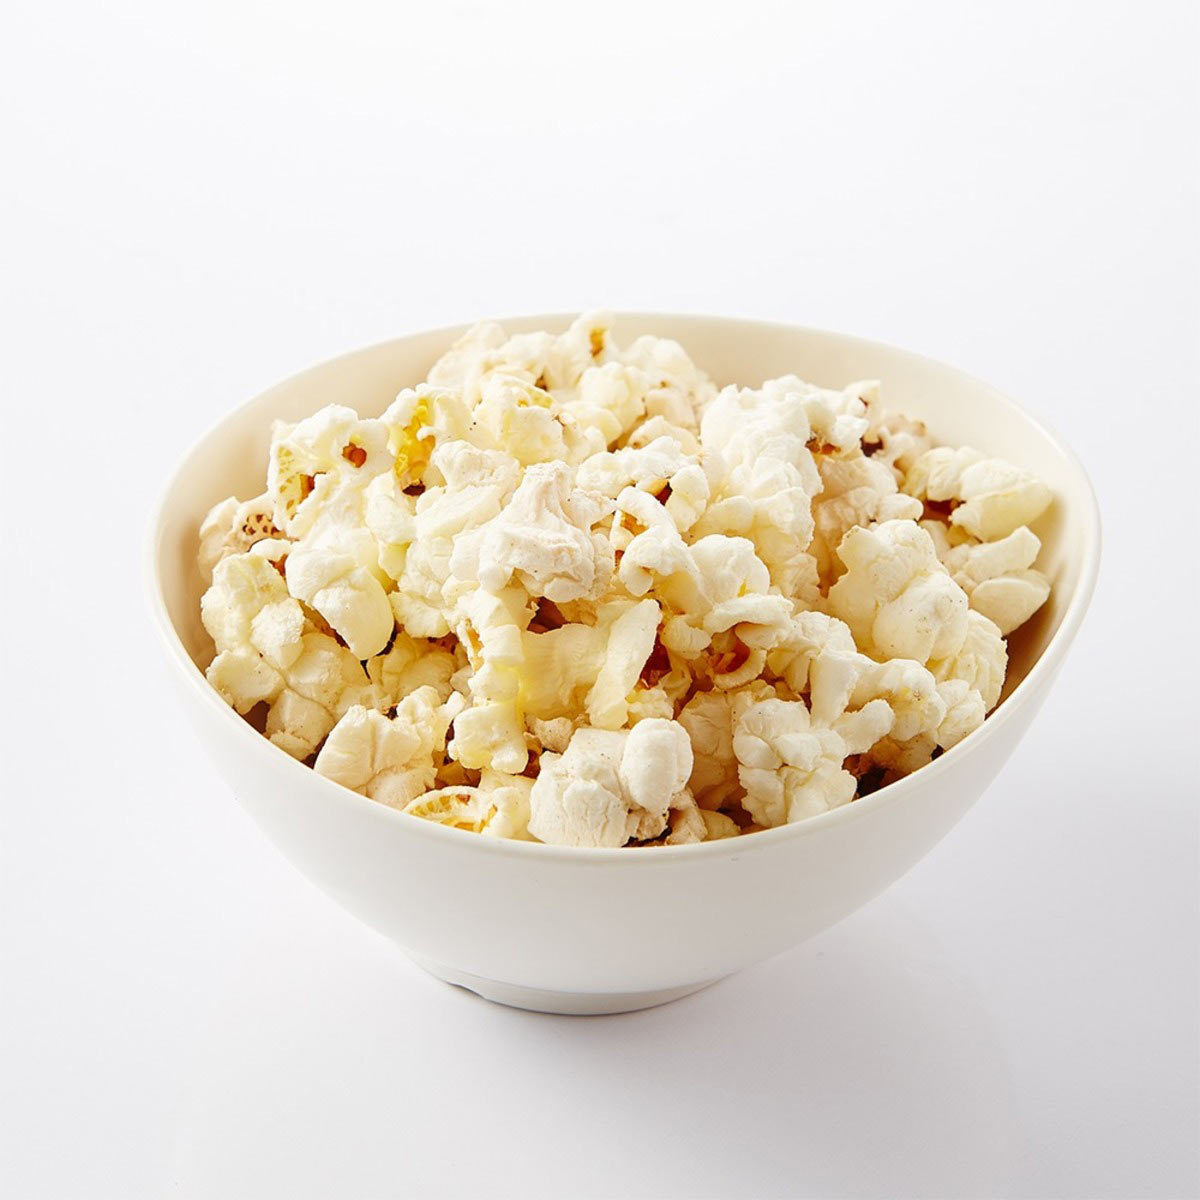 Kirkland Signature Microwave Popcorn, 44 x 93g